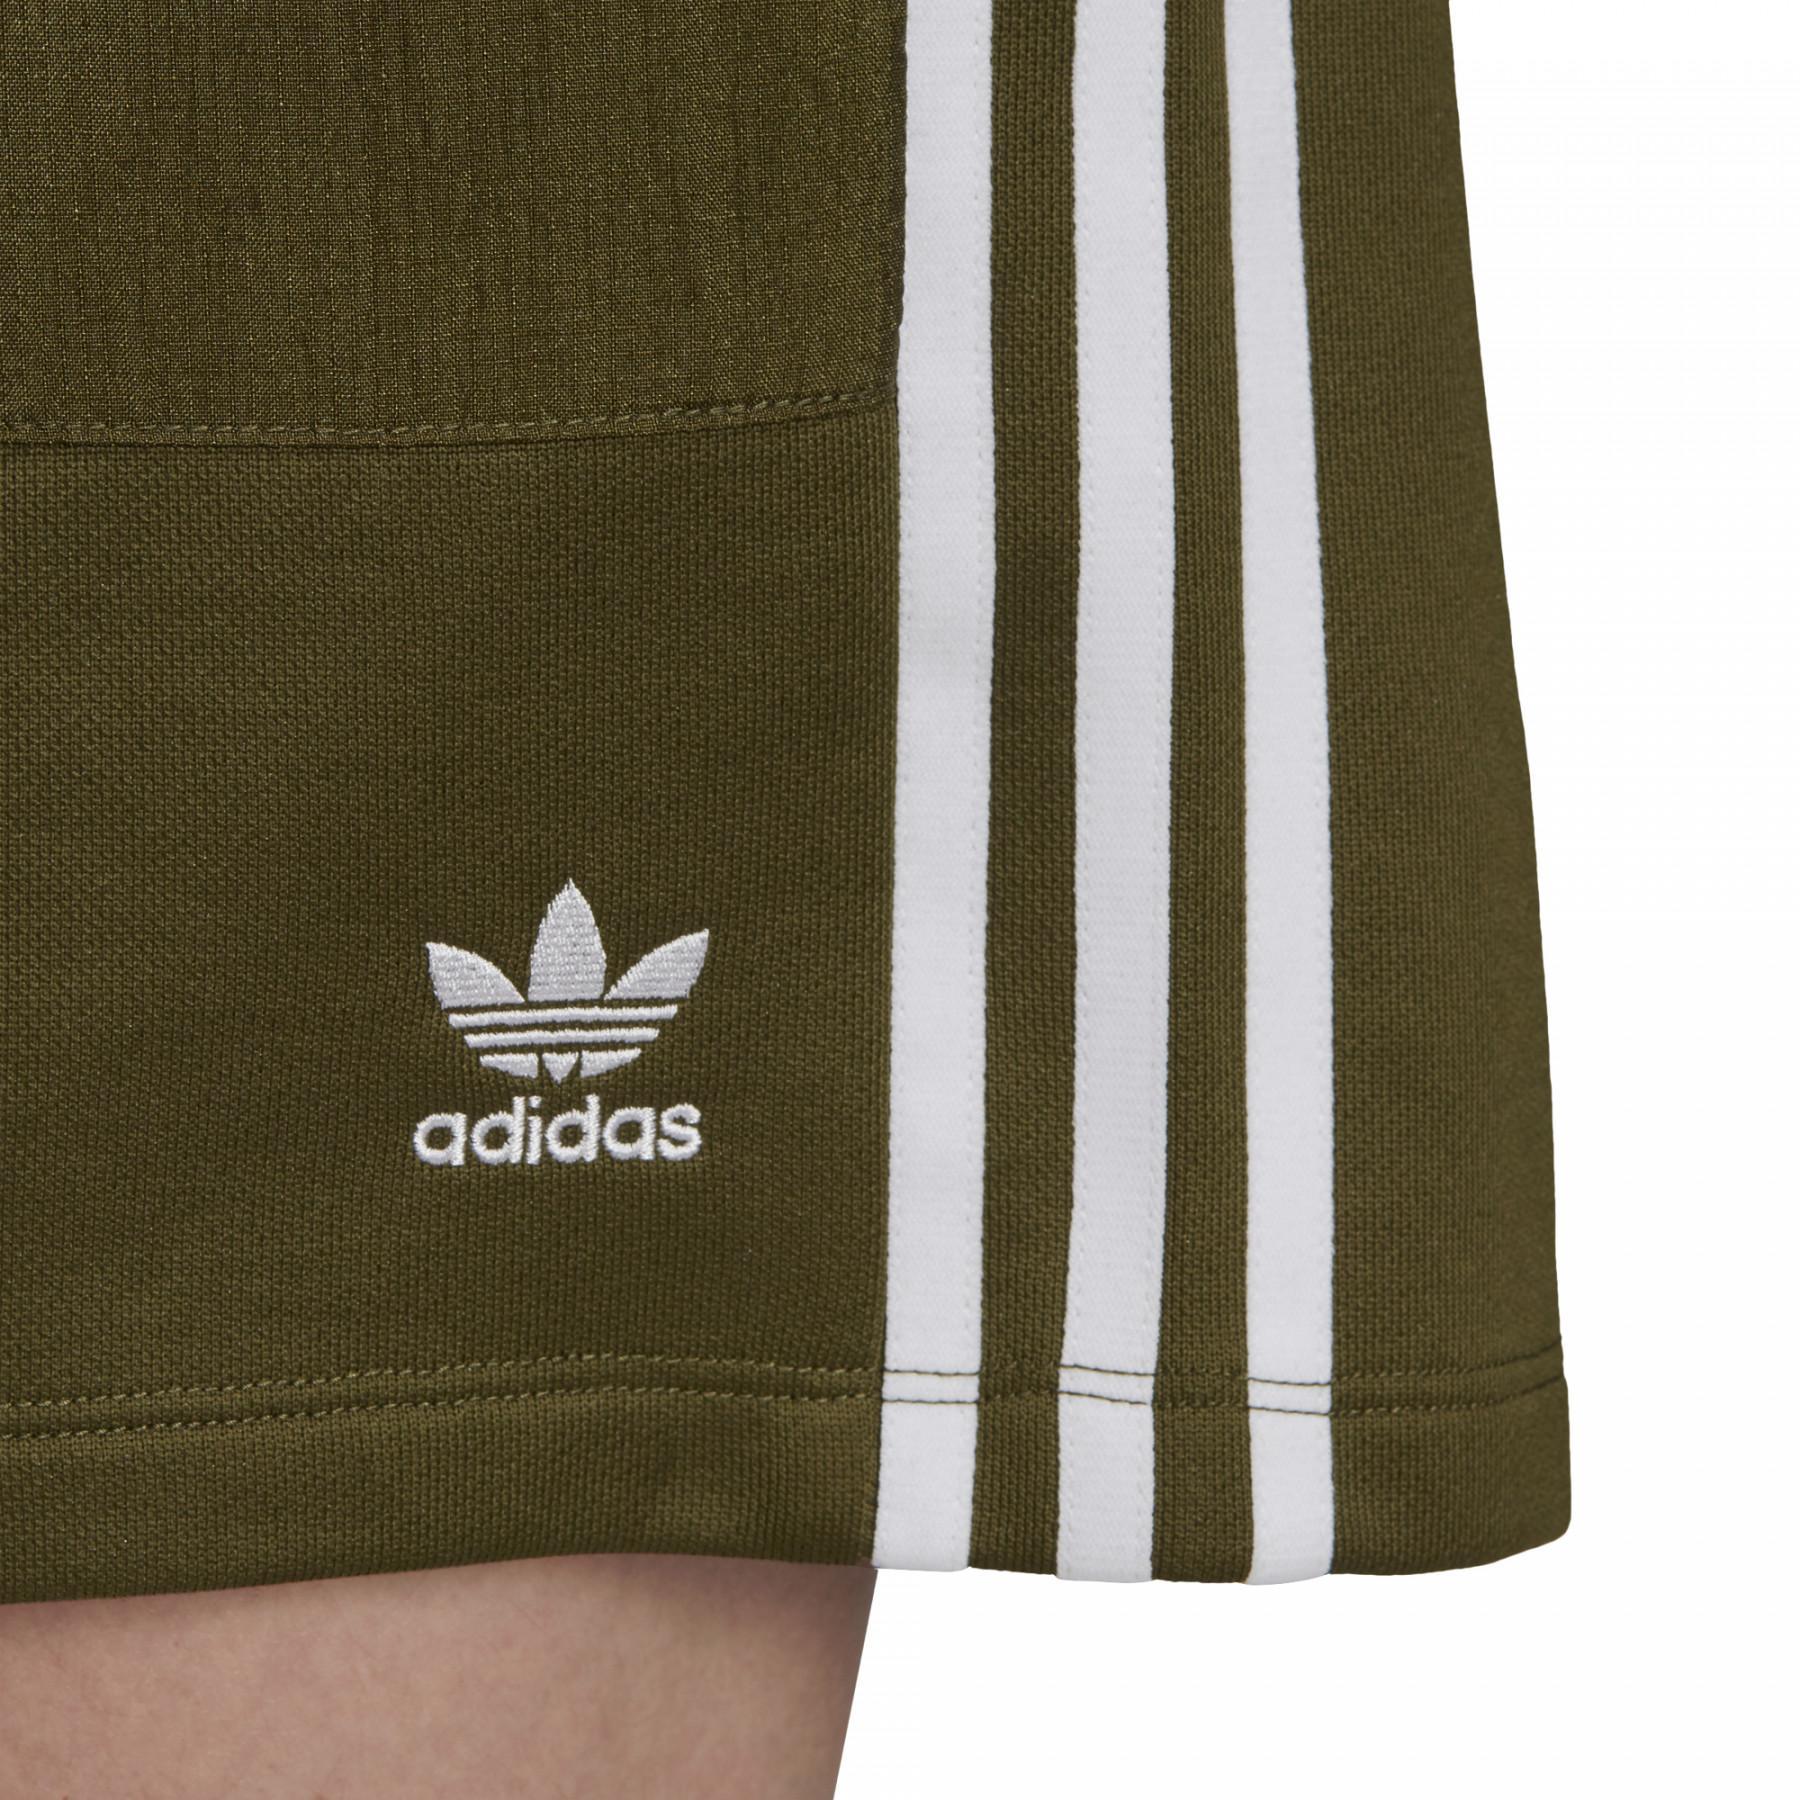 Women's shorts adidas Originals Logo